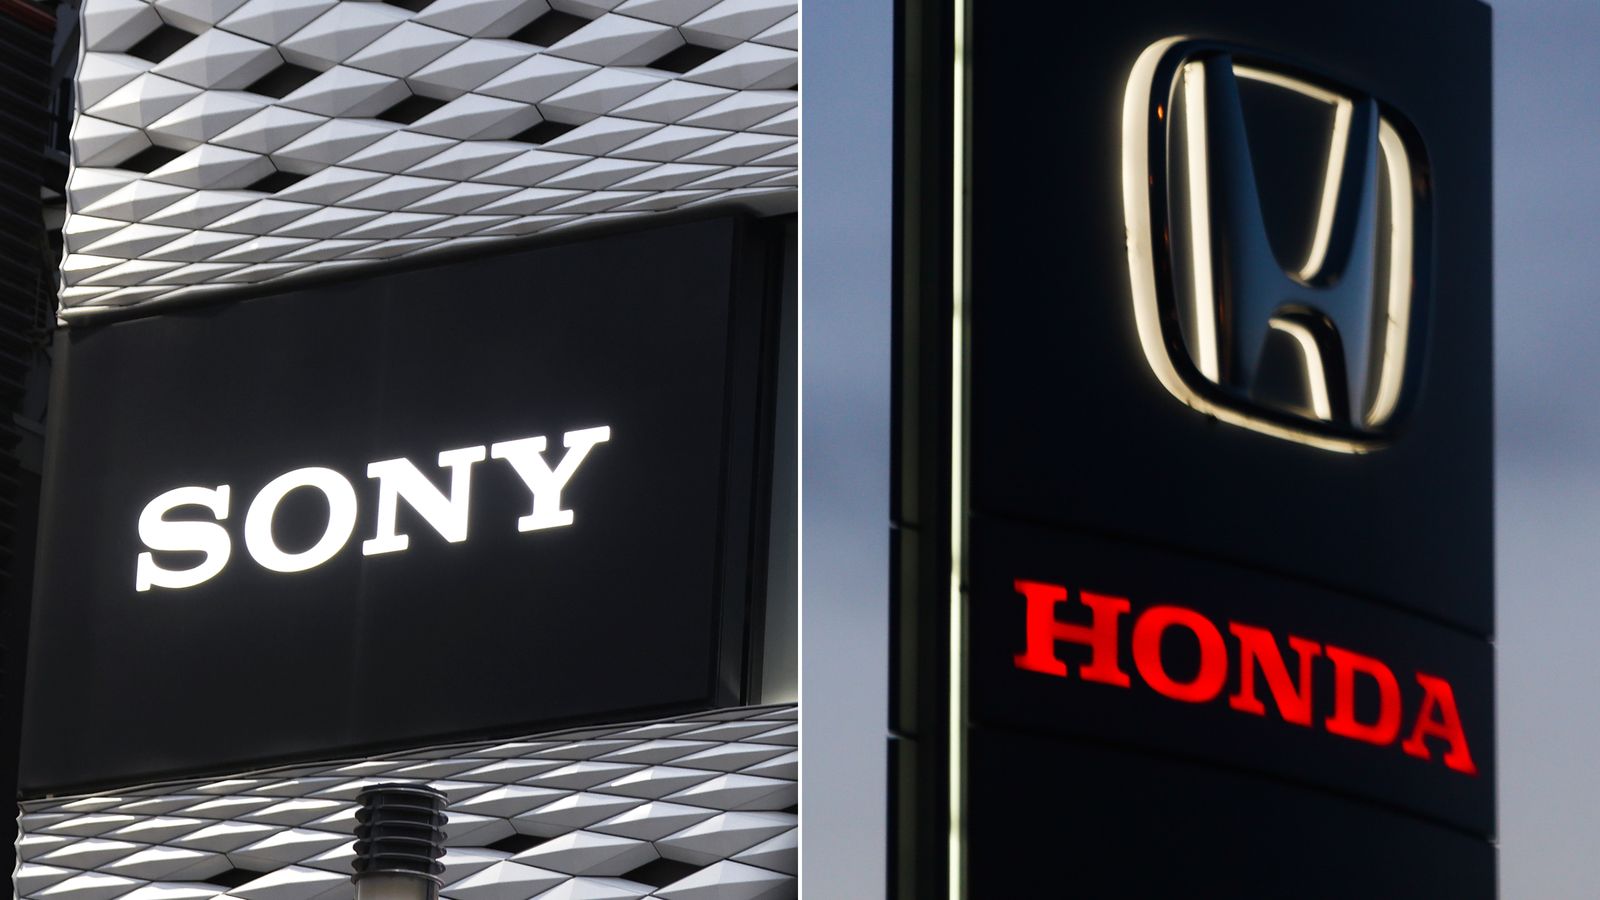 Afeela: Sony und Honda planen Multimedia-Auto - connect